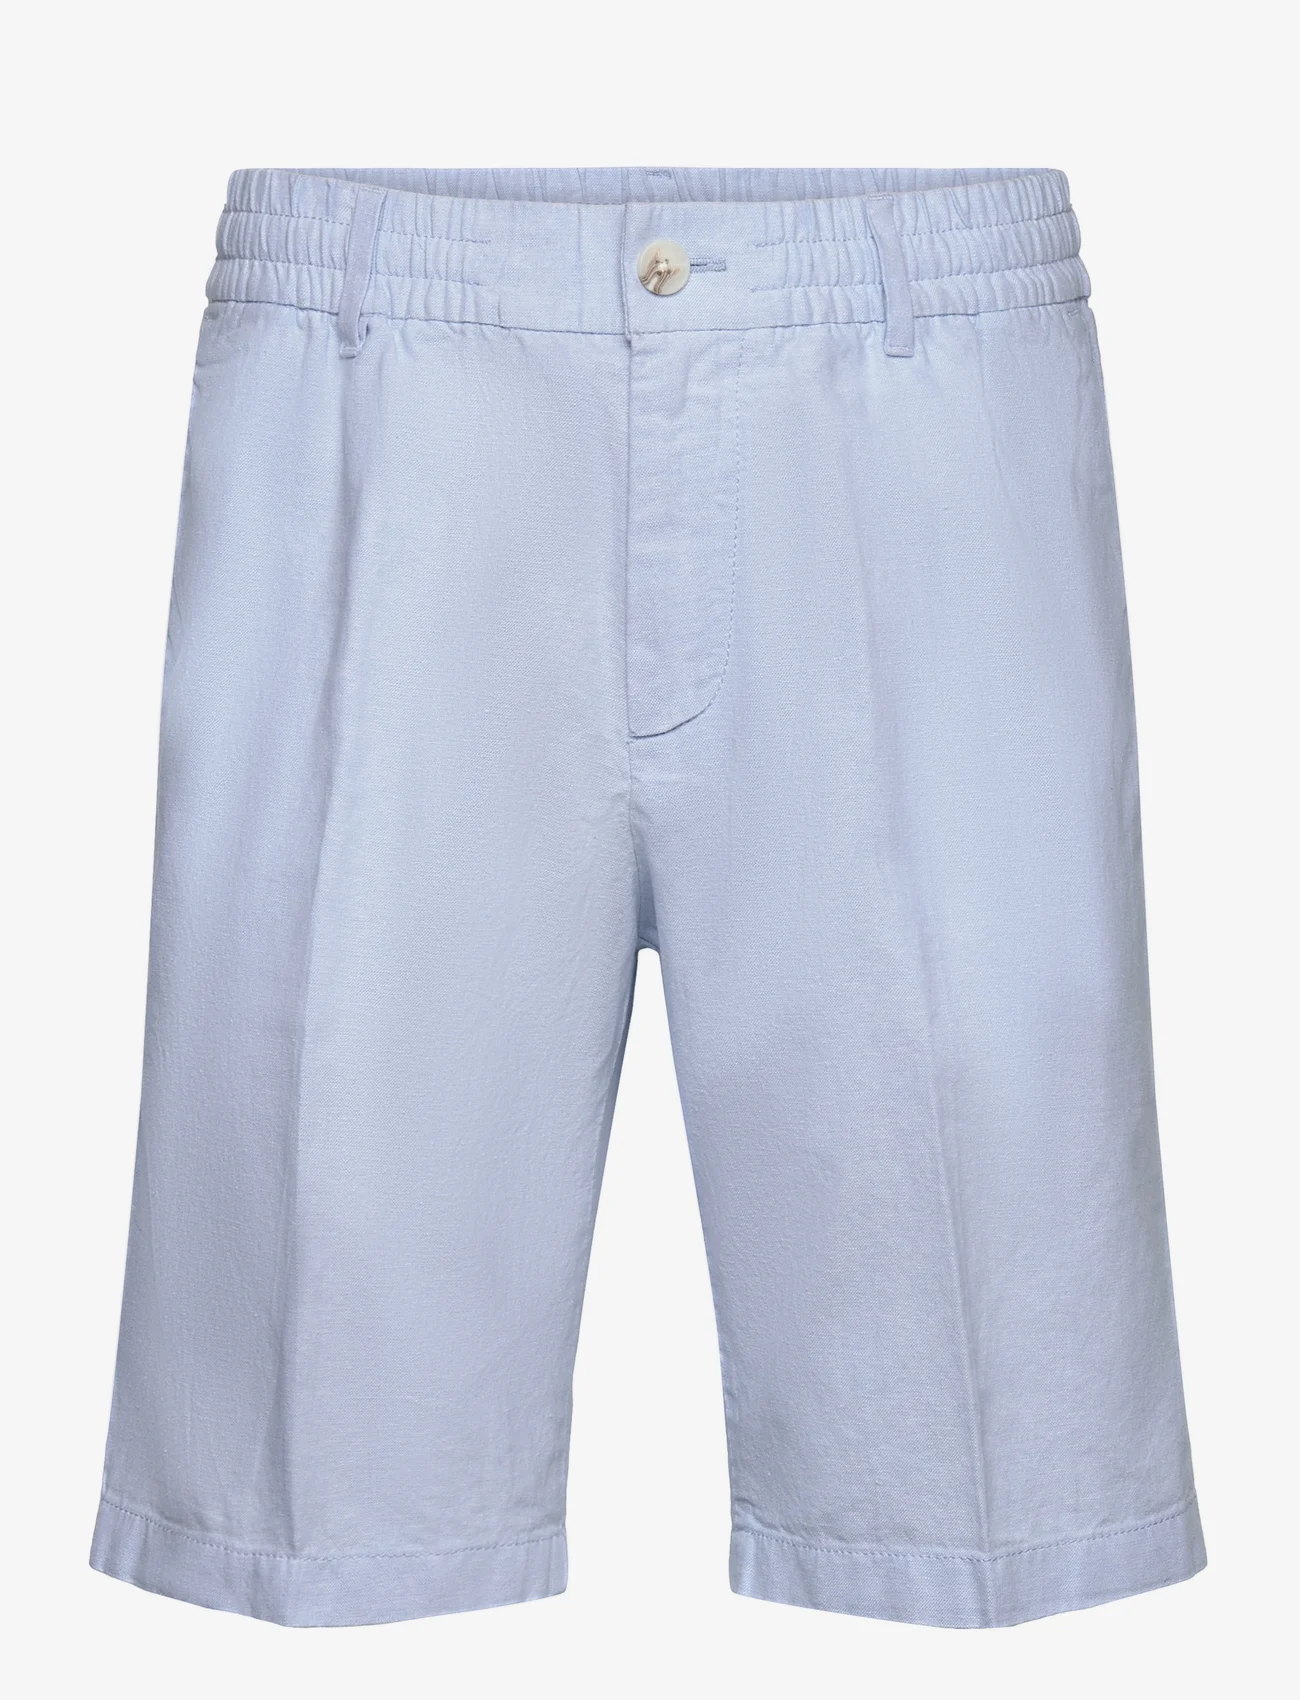 Tom Tailor - regular linen shorts - linen shorts - soft powder blue chambray - 0